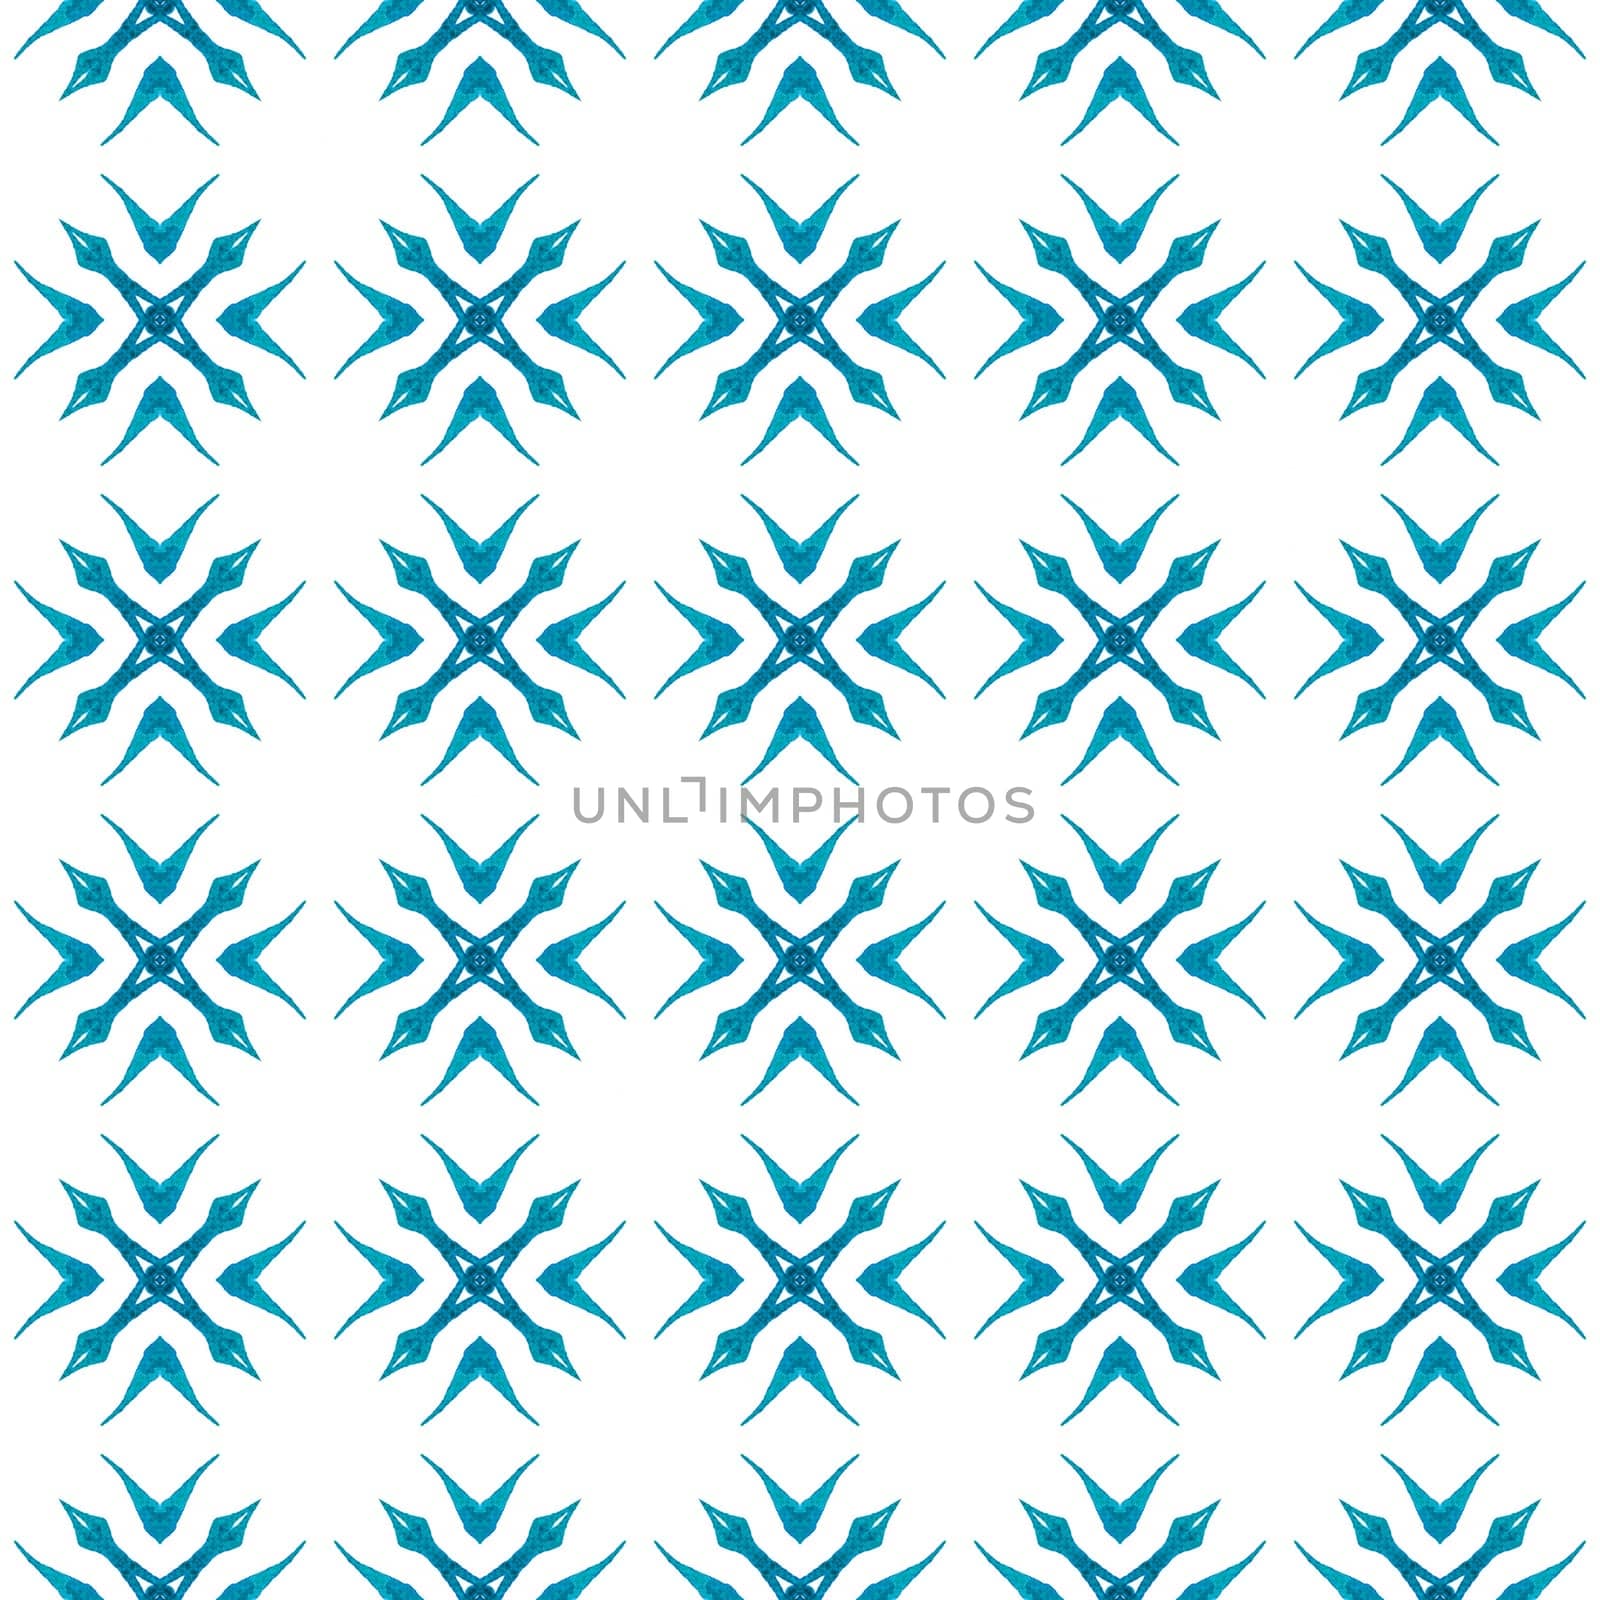 Tropical seamless pattern. Blue pleasing boho chic summer design. Textile ready decent print, swimwear fabric, wallpaper, wrapping. Hand drawn tropical seamless border.